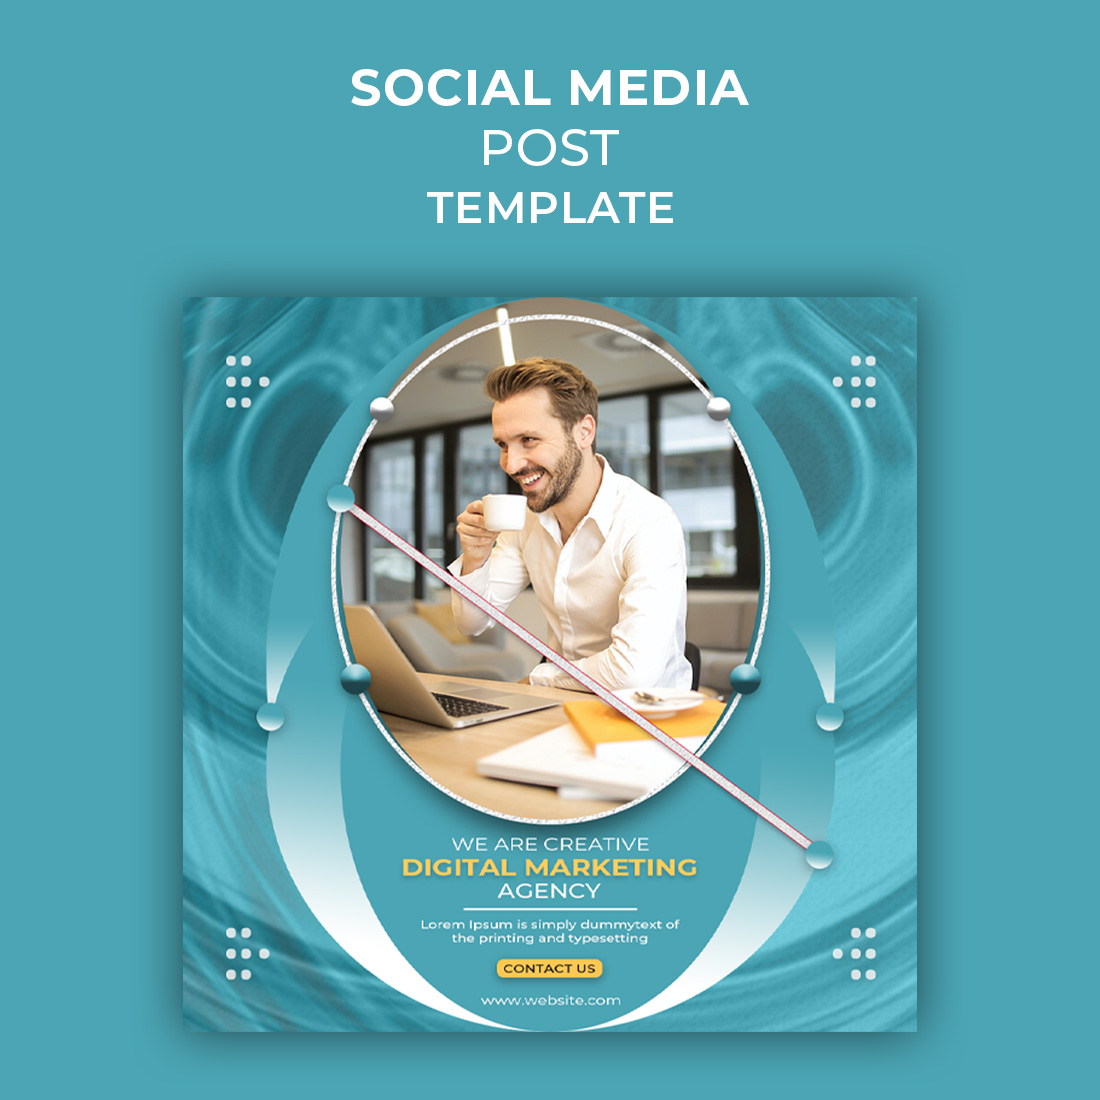 Digital marketing social media post template design cover image.